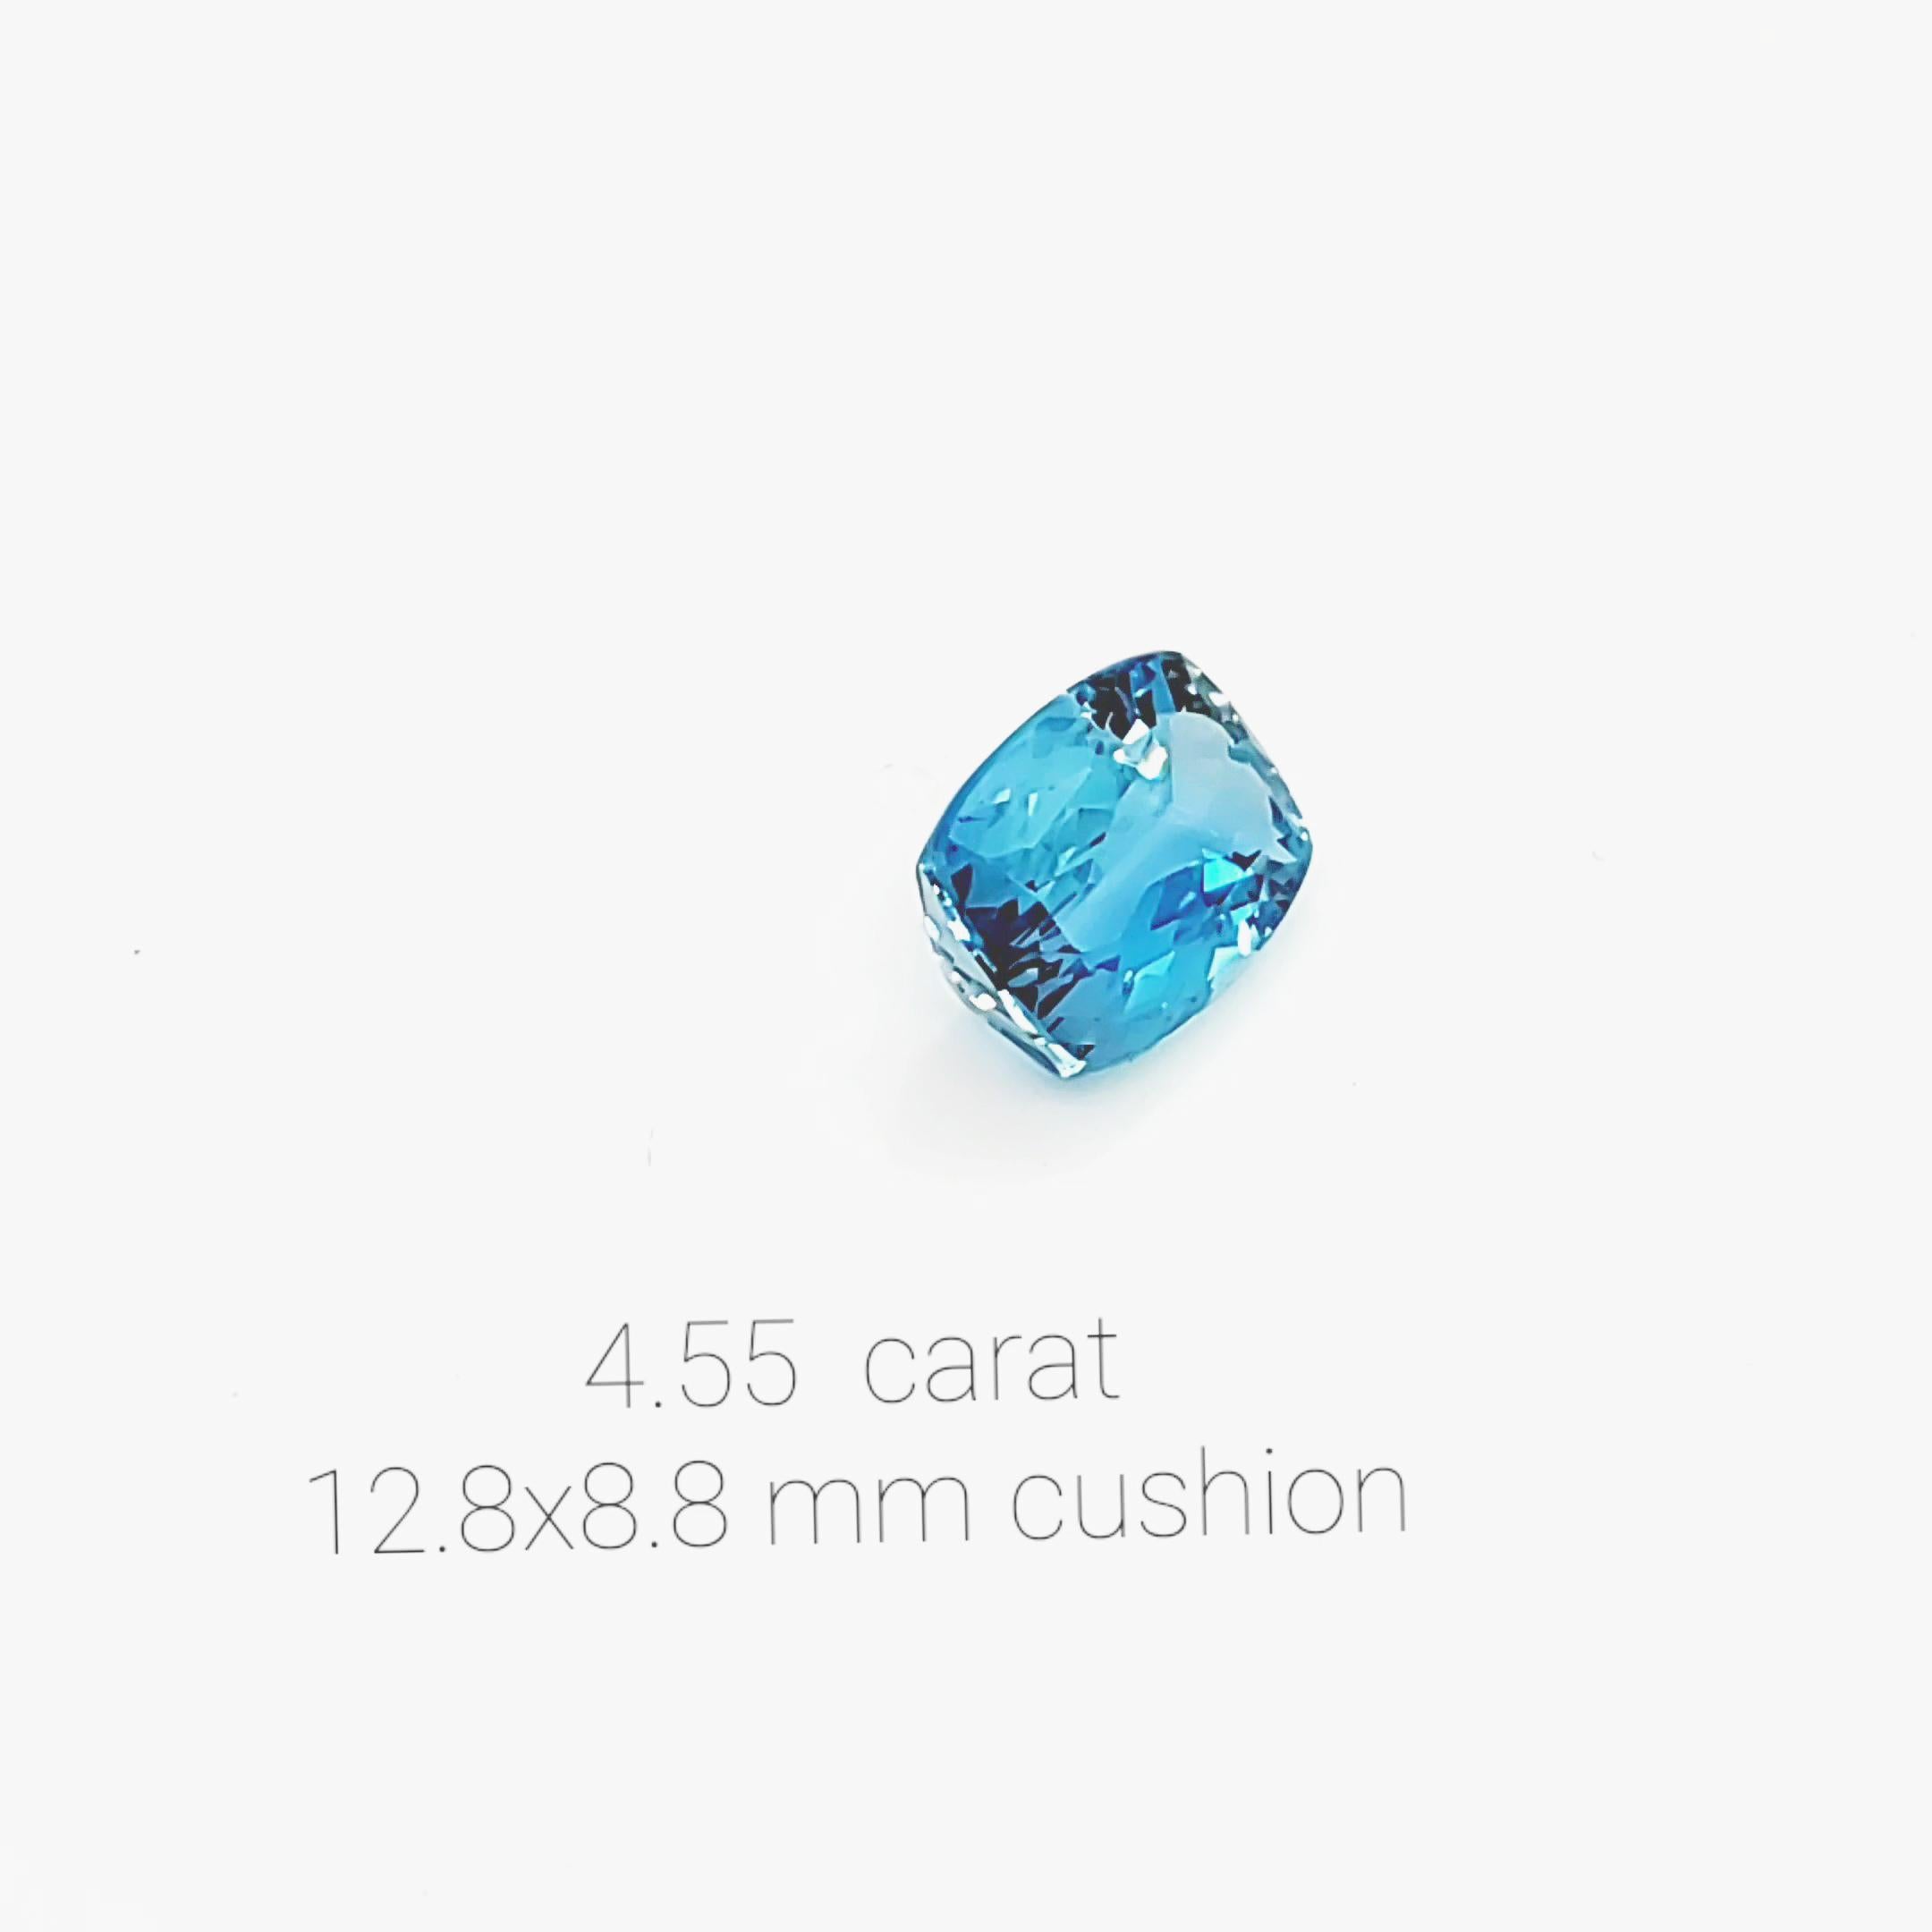 Cushion Cut 4.55 Carat Intense Blue Cushion Aquamarine Natural Gemstone For Sale